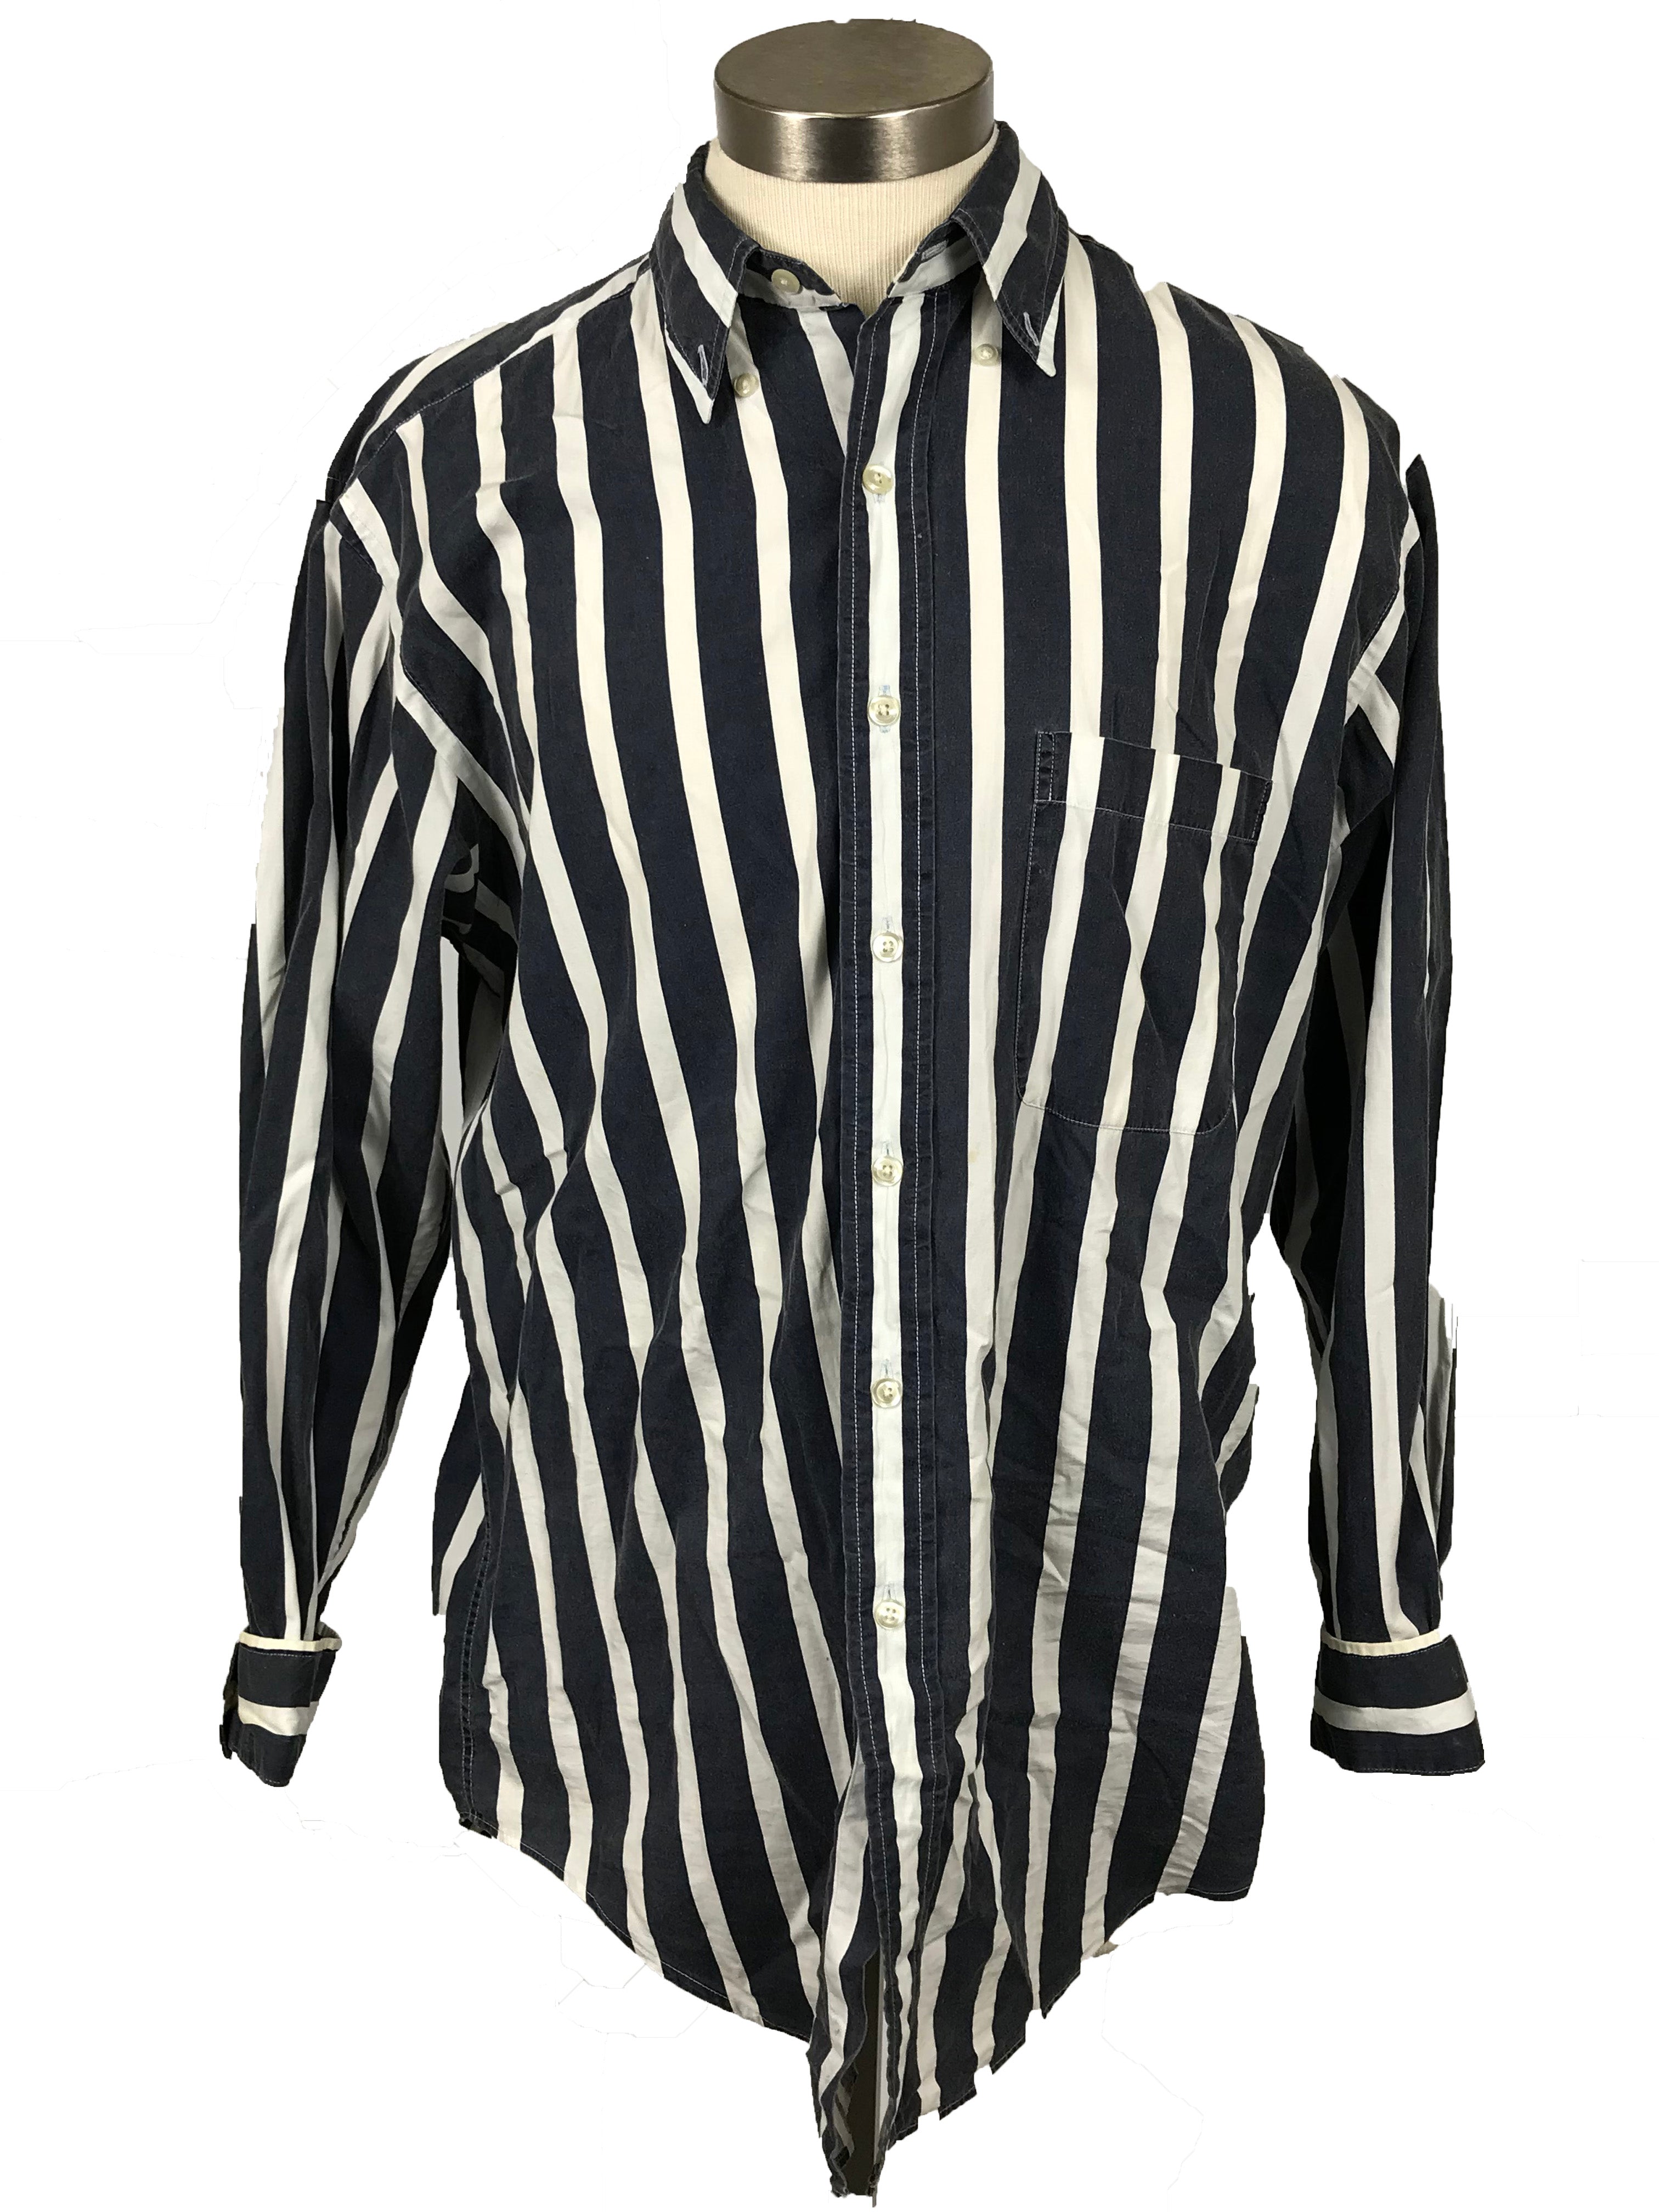 Brooks Brothers Gray and White Striped Dress Shirt Men's Size Medium